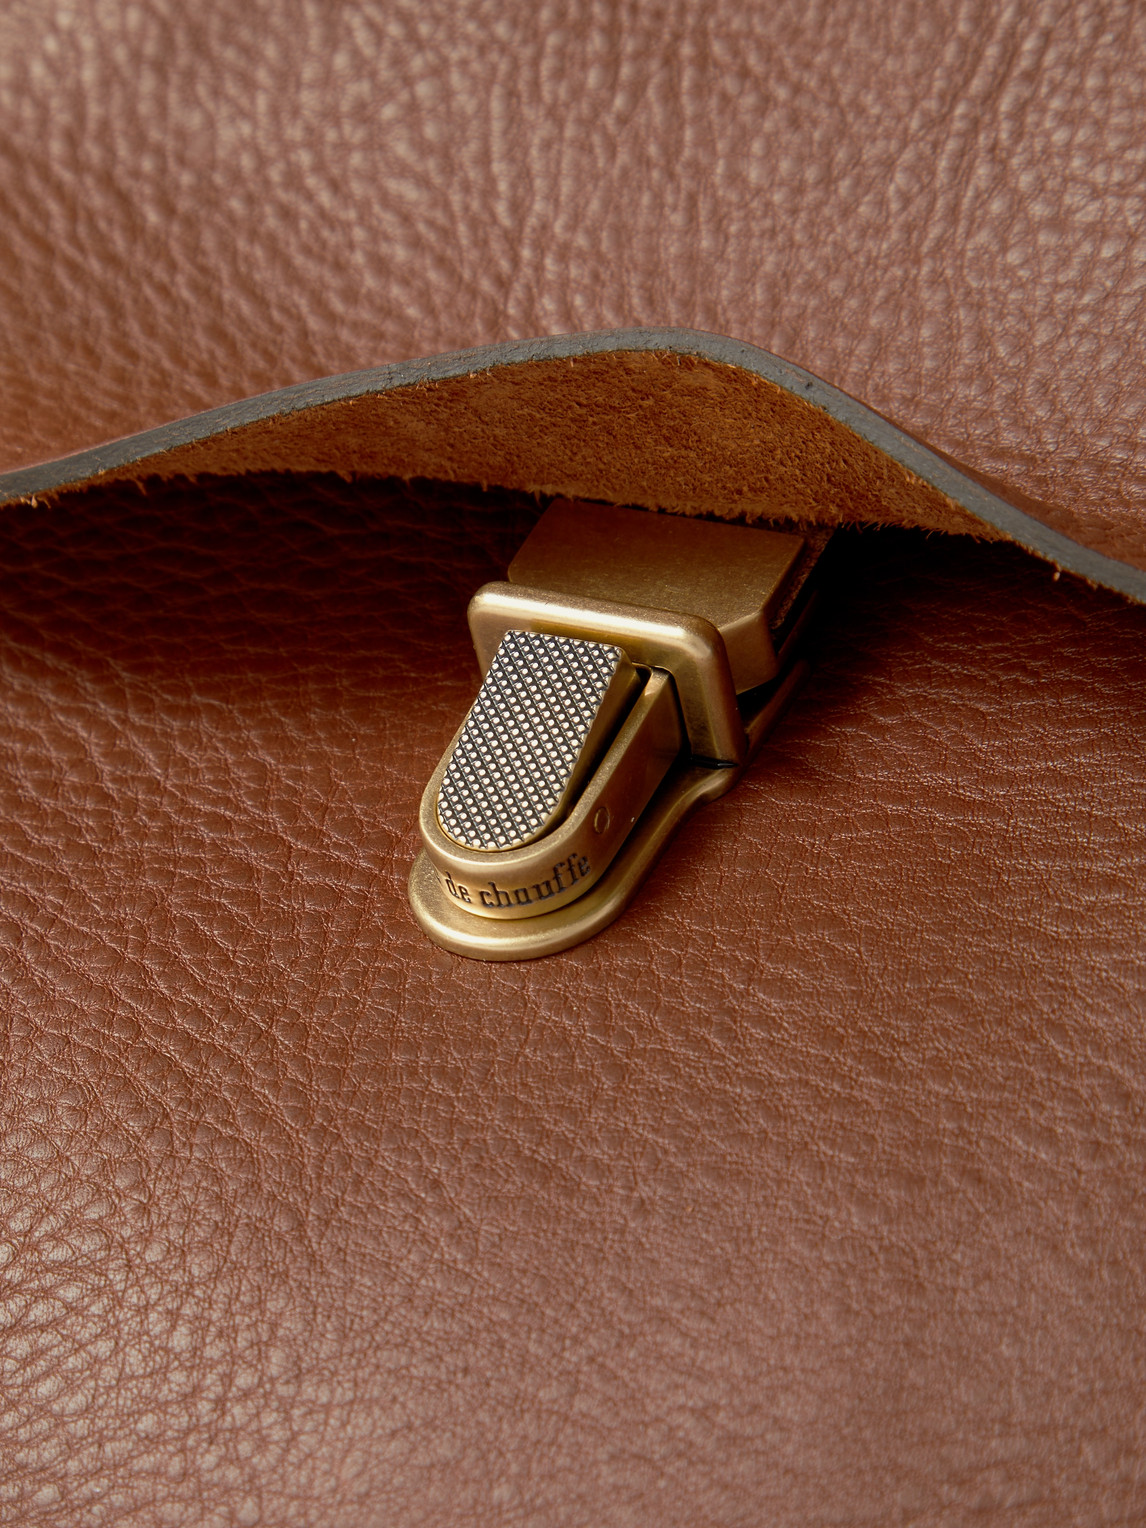 Shop Bleu De Chauffe Full-grain Leather Backpack In Brown